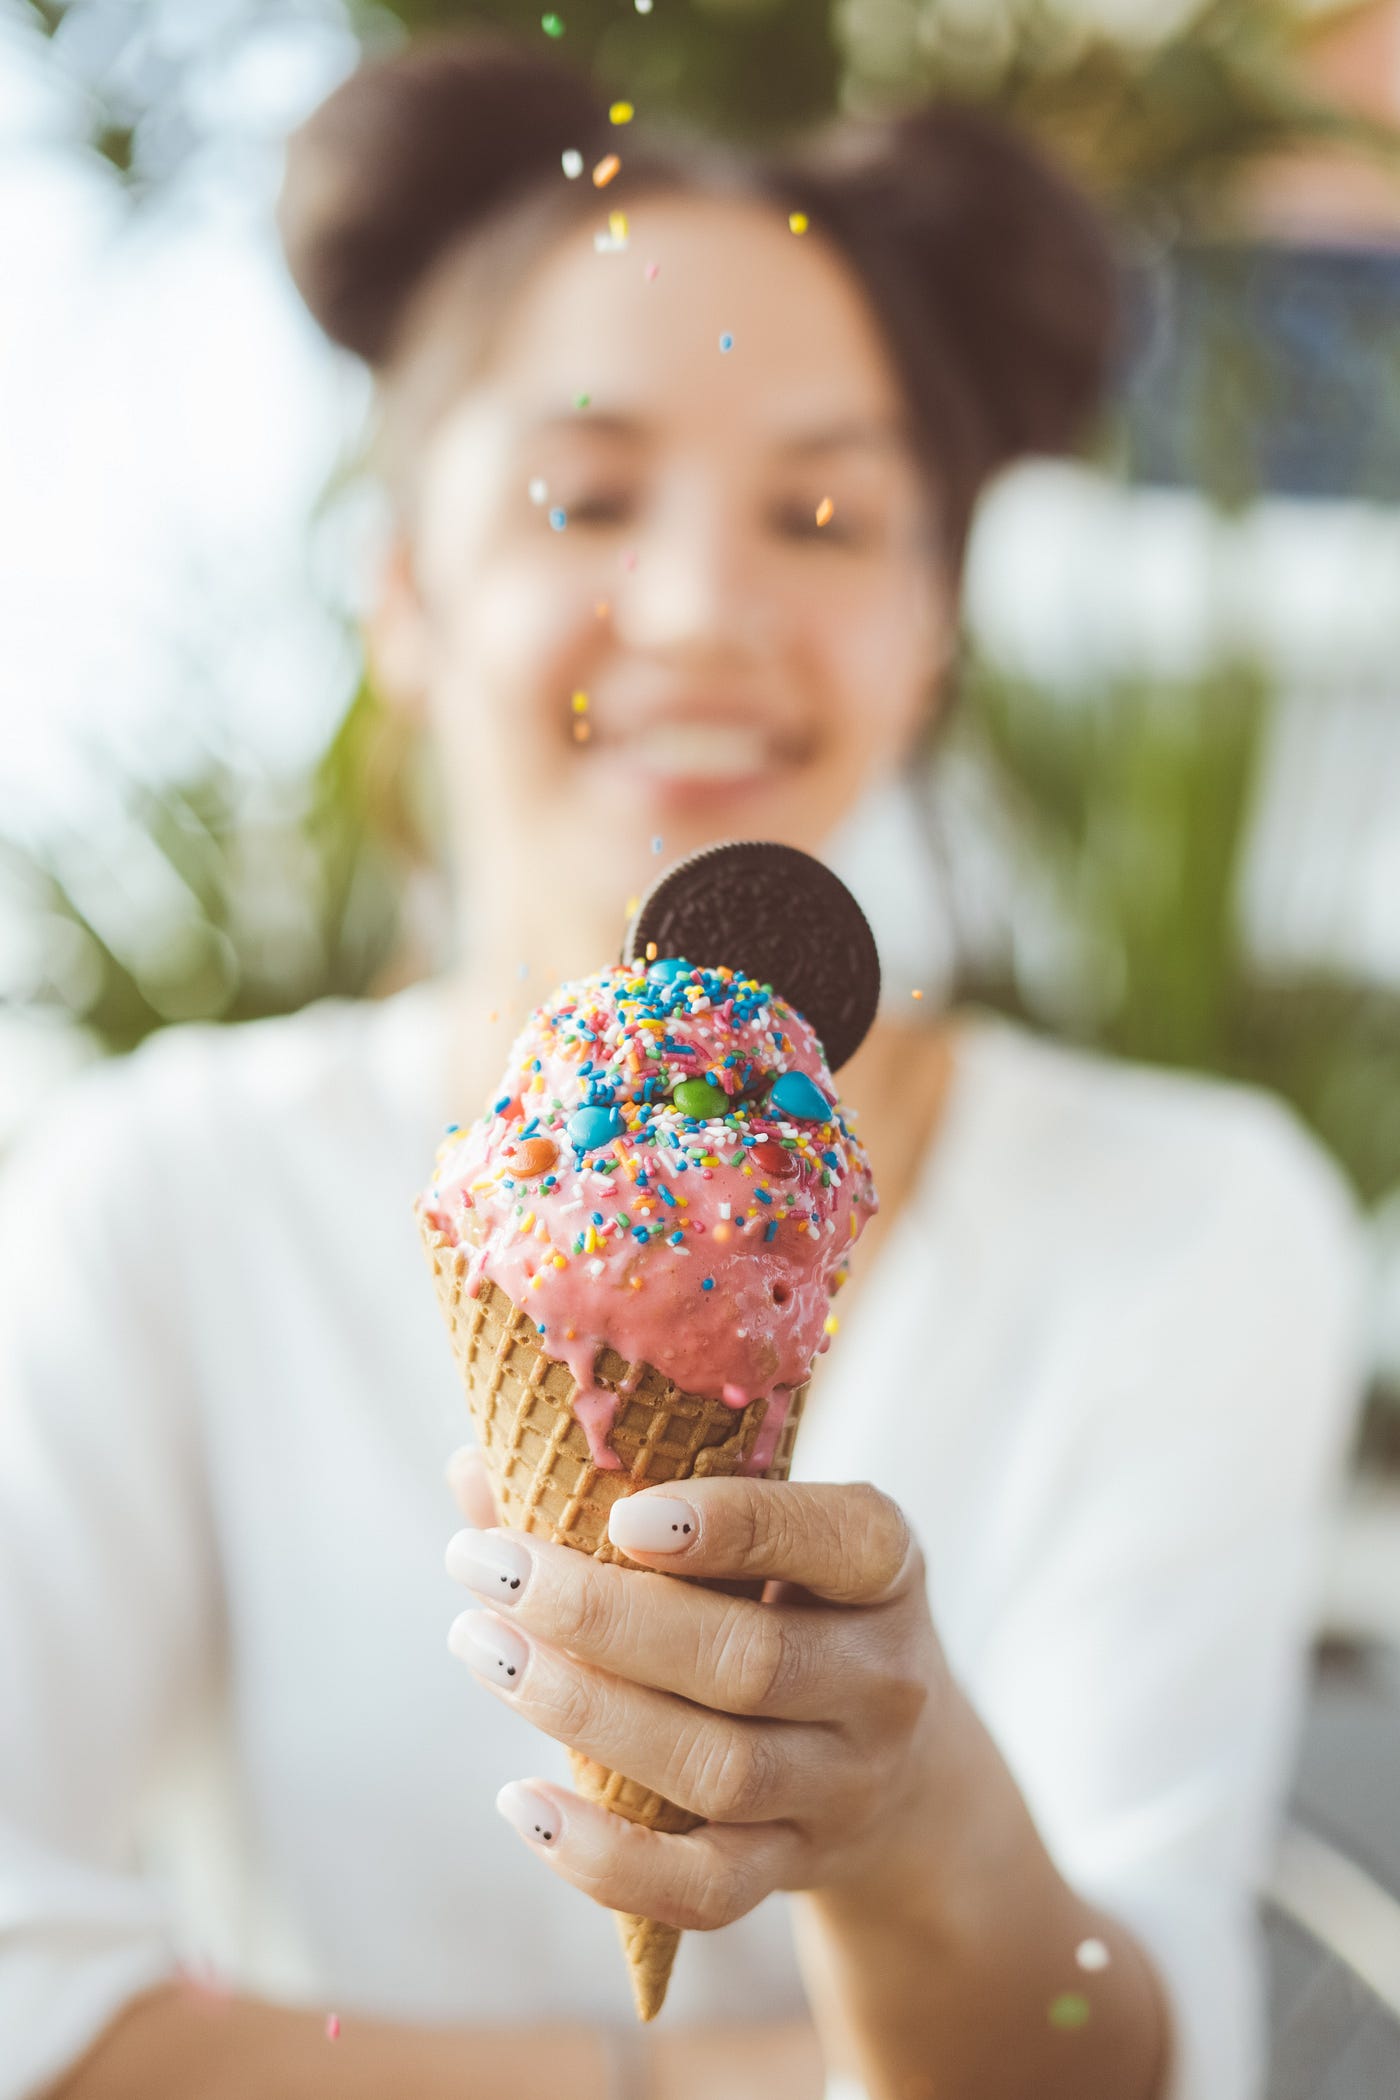 Control cravings for ice cream